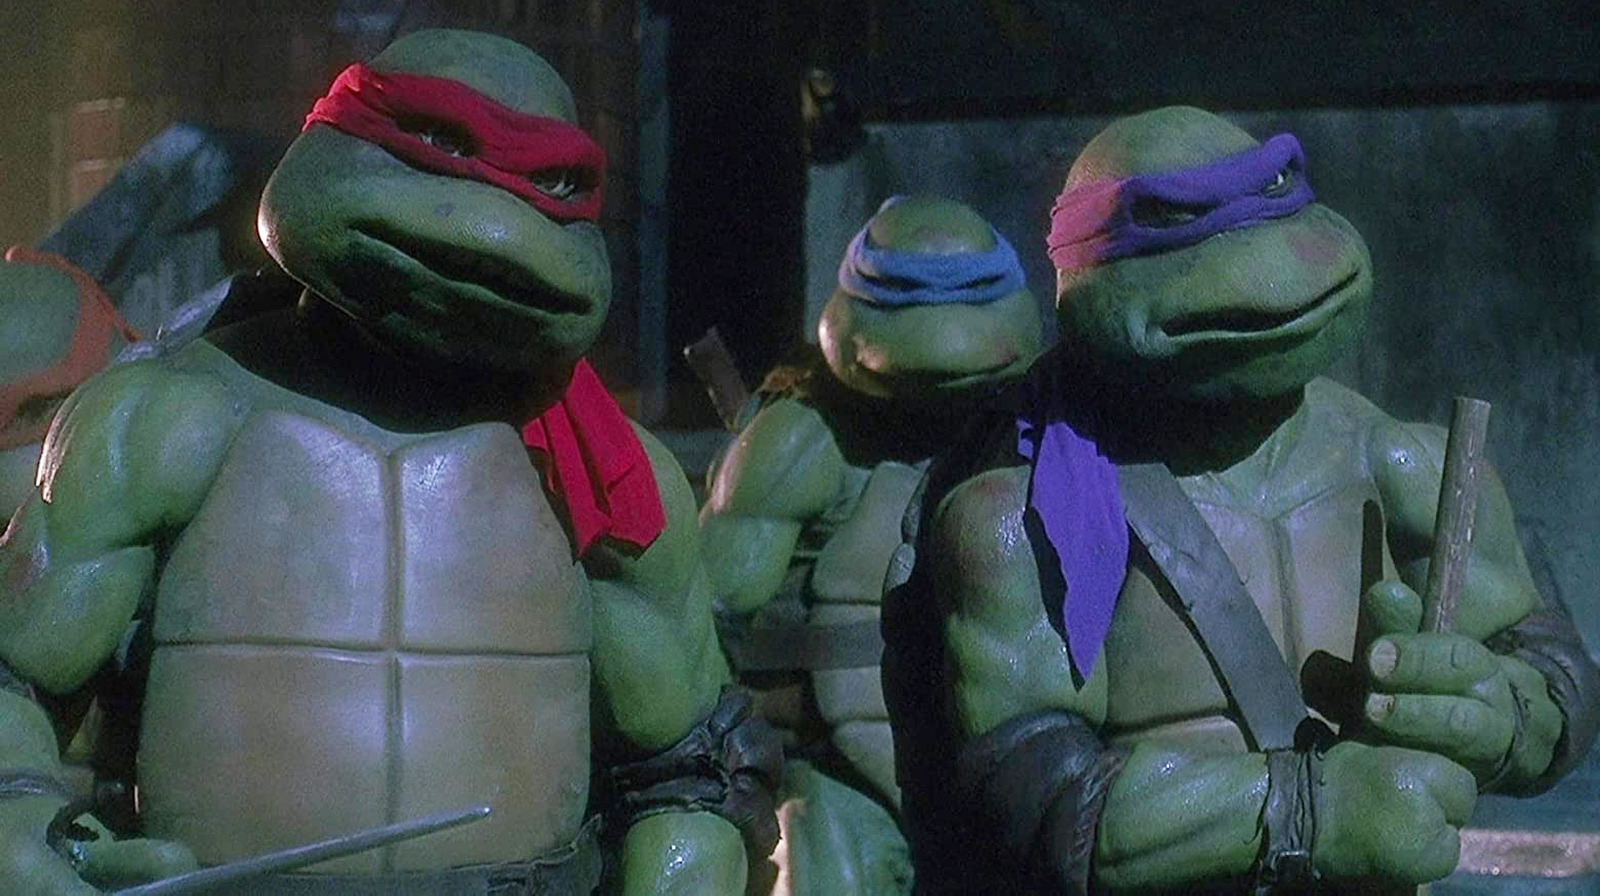 https://www.slashfilm.com/img/gallery/replacing-the-teenage-mutant-ninja-turtles-voices-in-post-wasnt-a-popular-decision/l-intro-1665514825.jpg